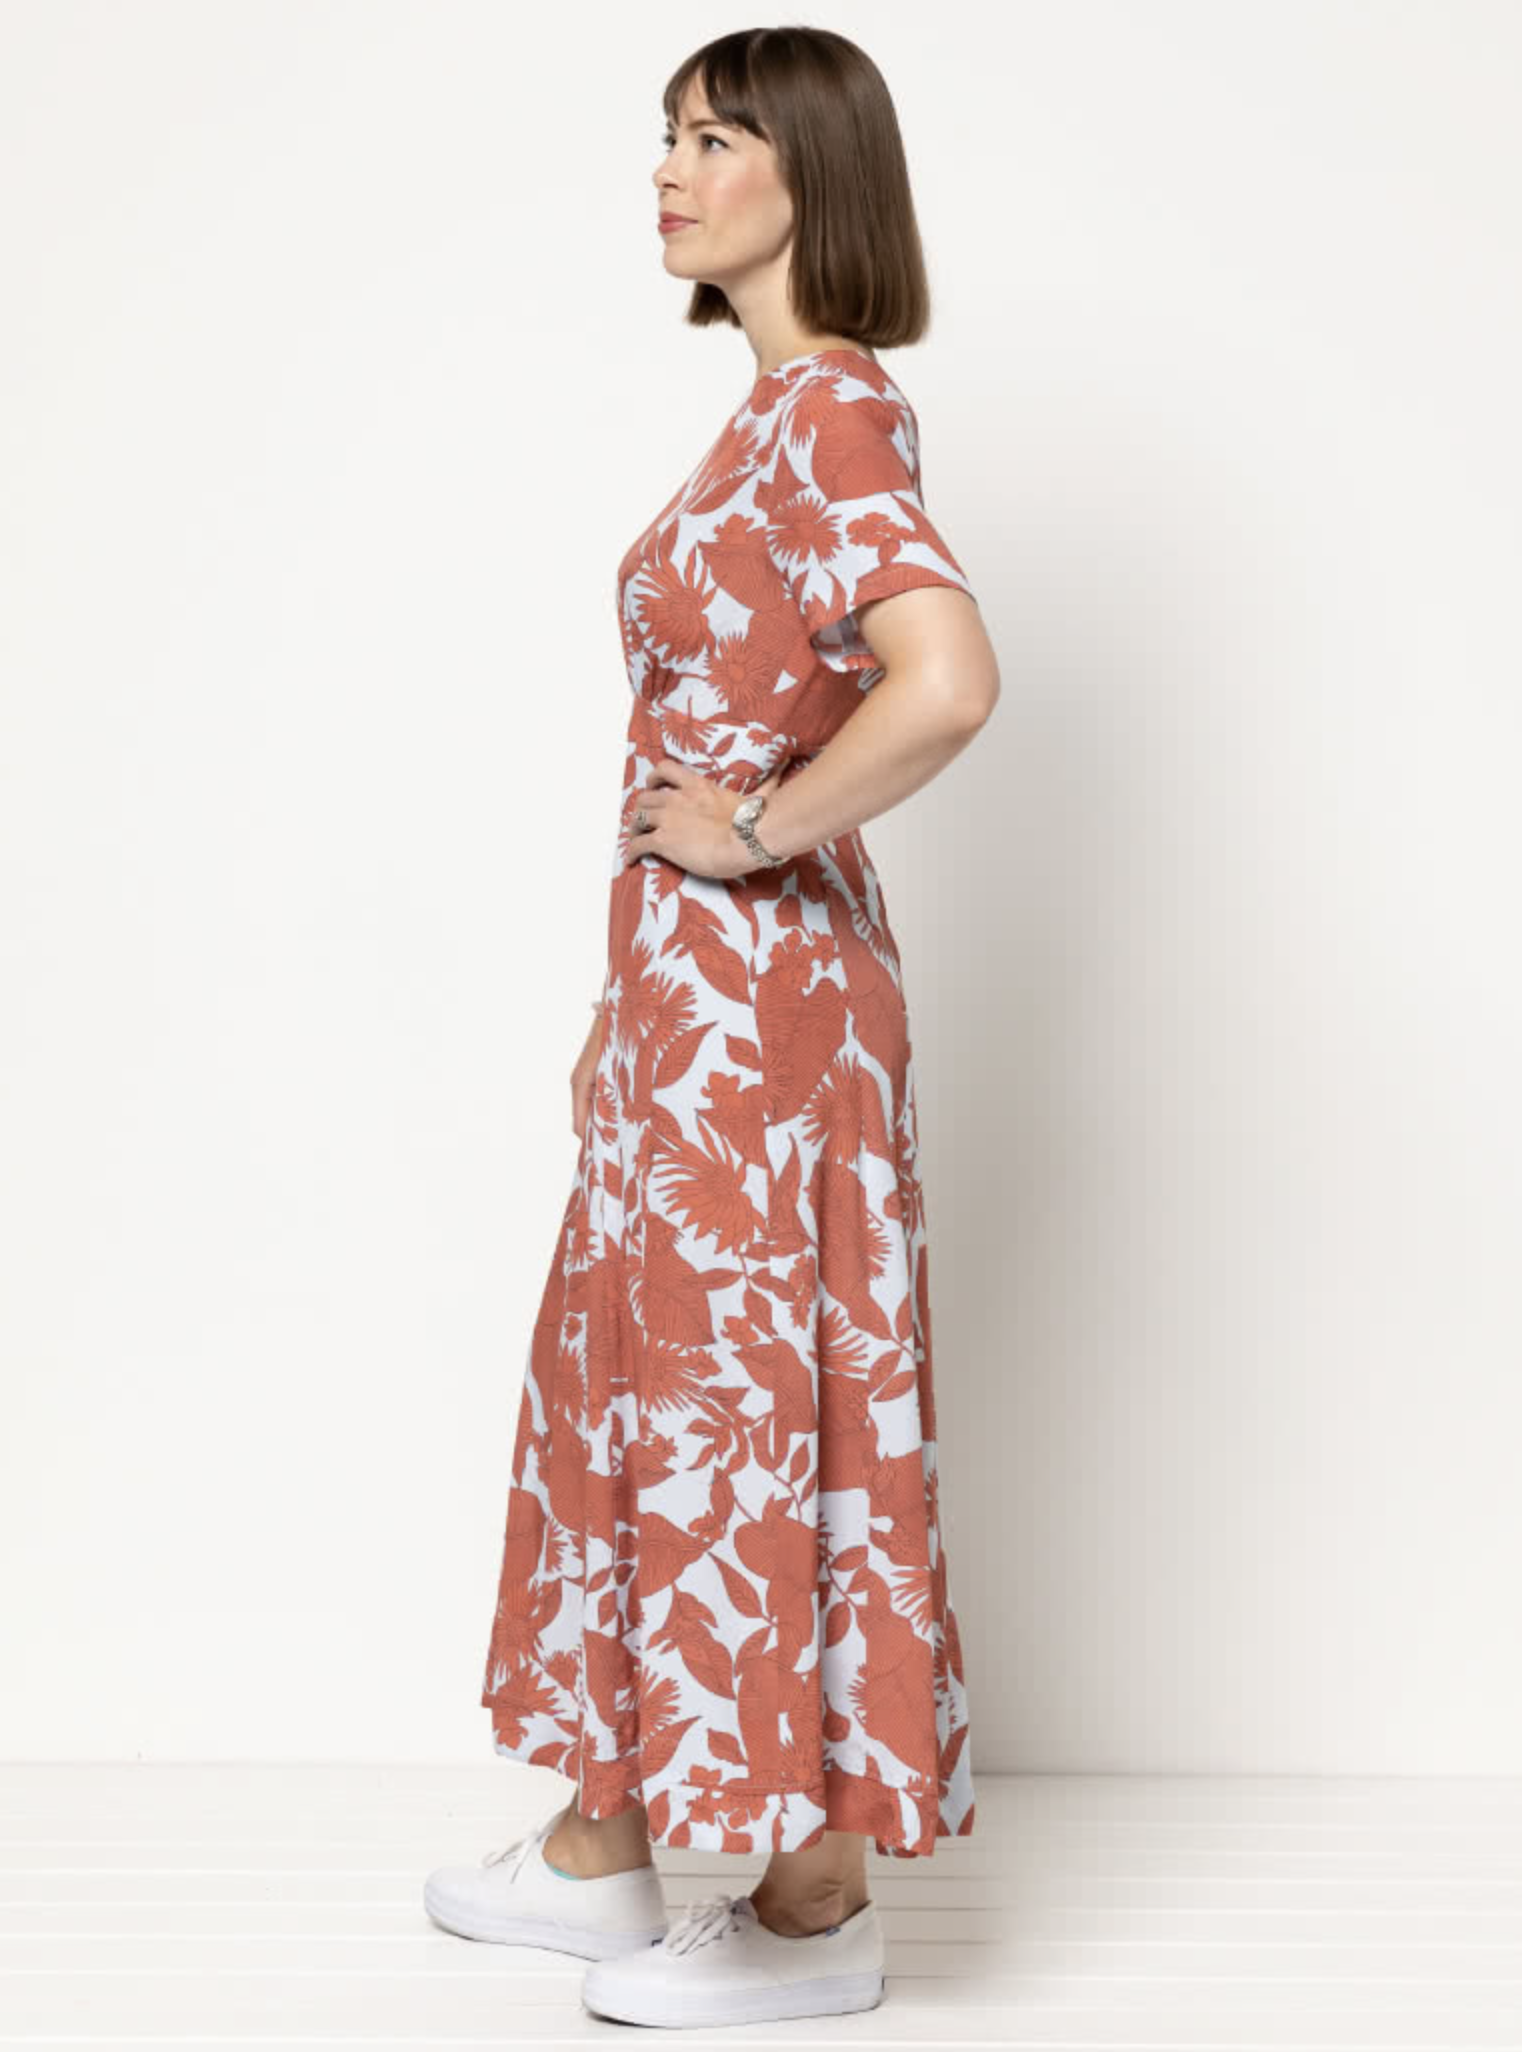 Style Arc Trinnie Woven Dress - The Fold Line